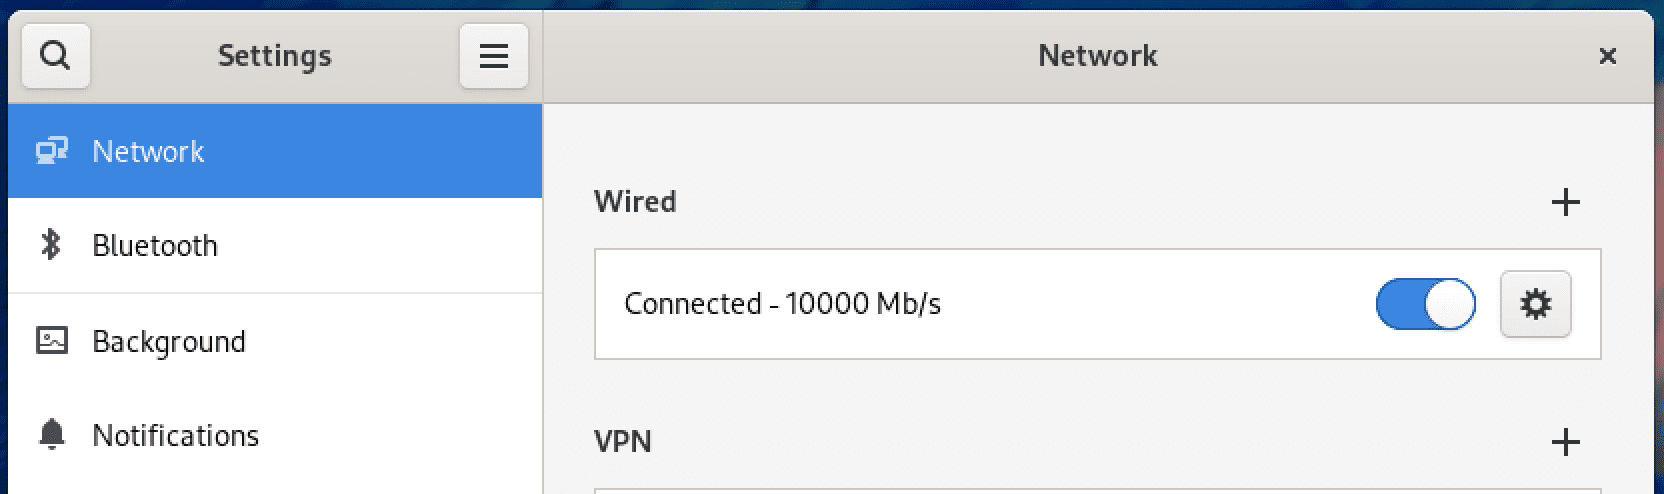 network option